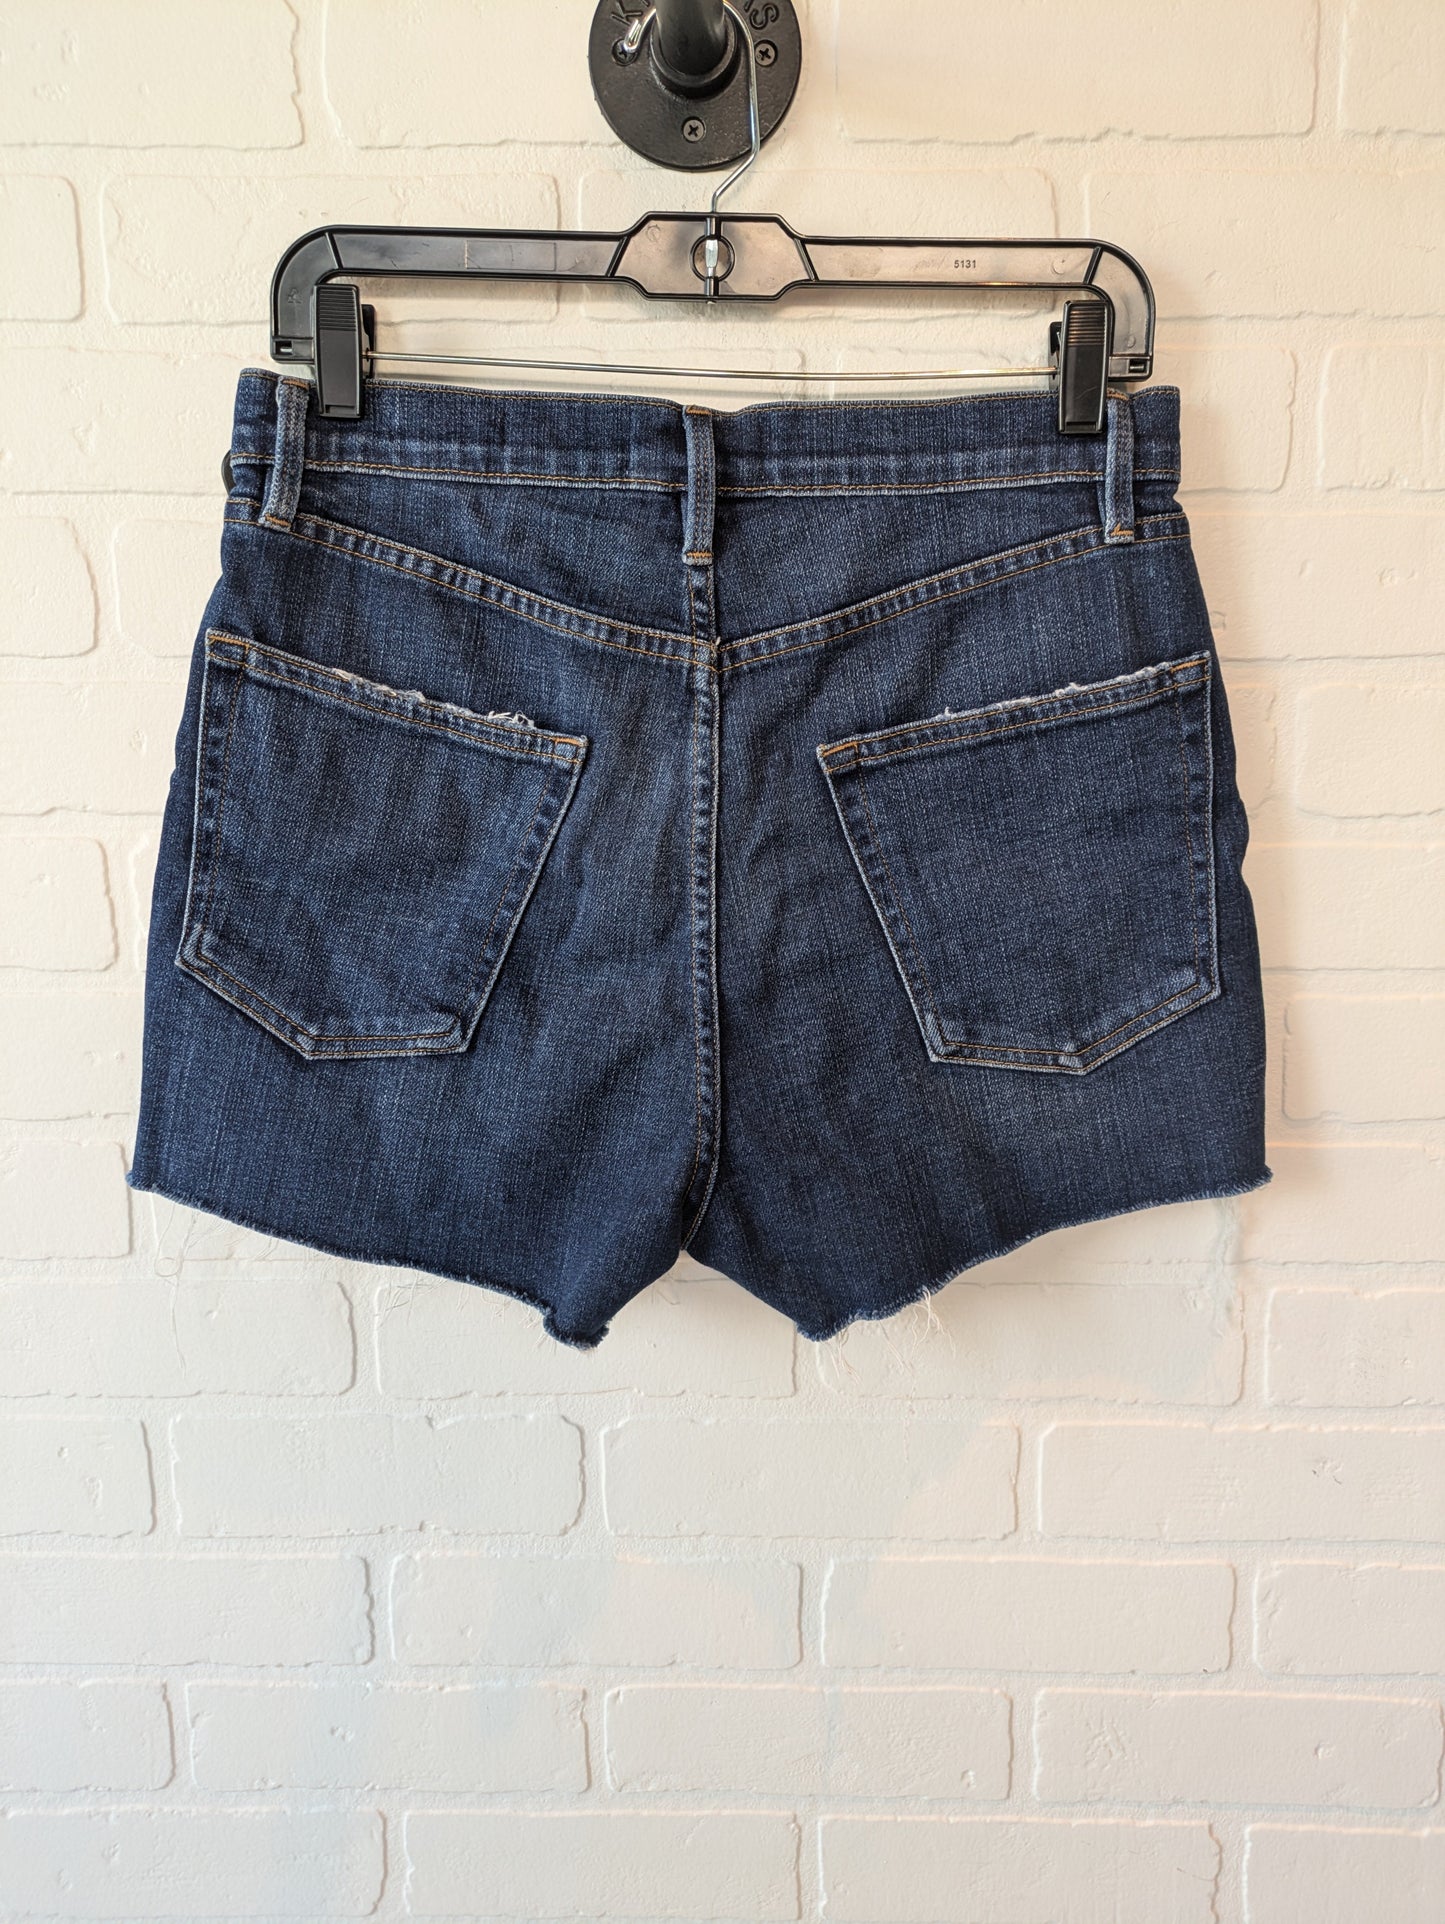 Blue Denim Shorts Frame, Size 4